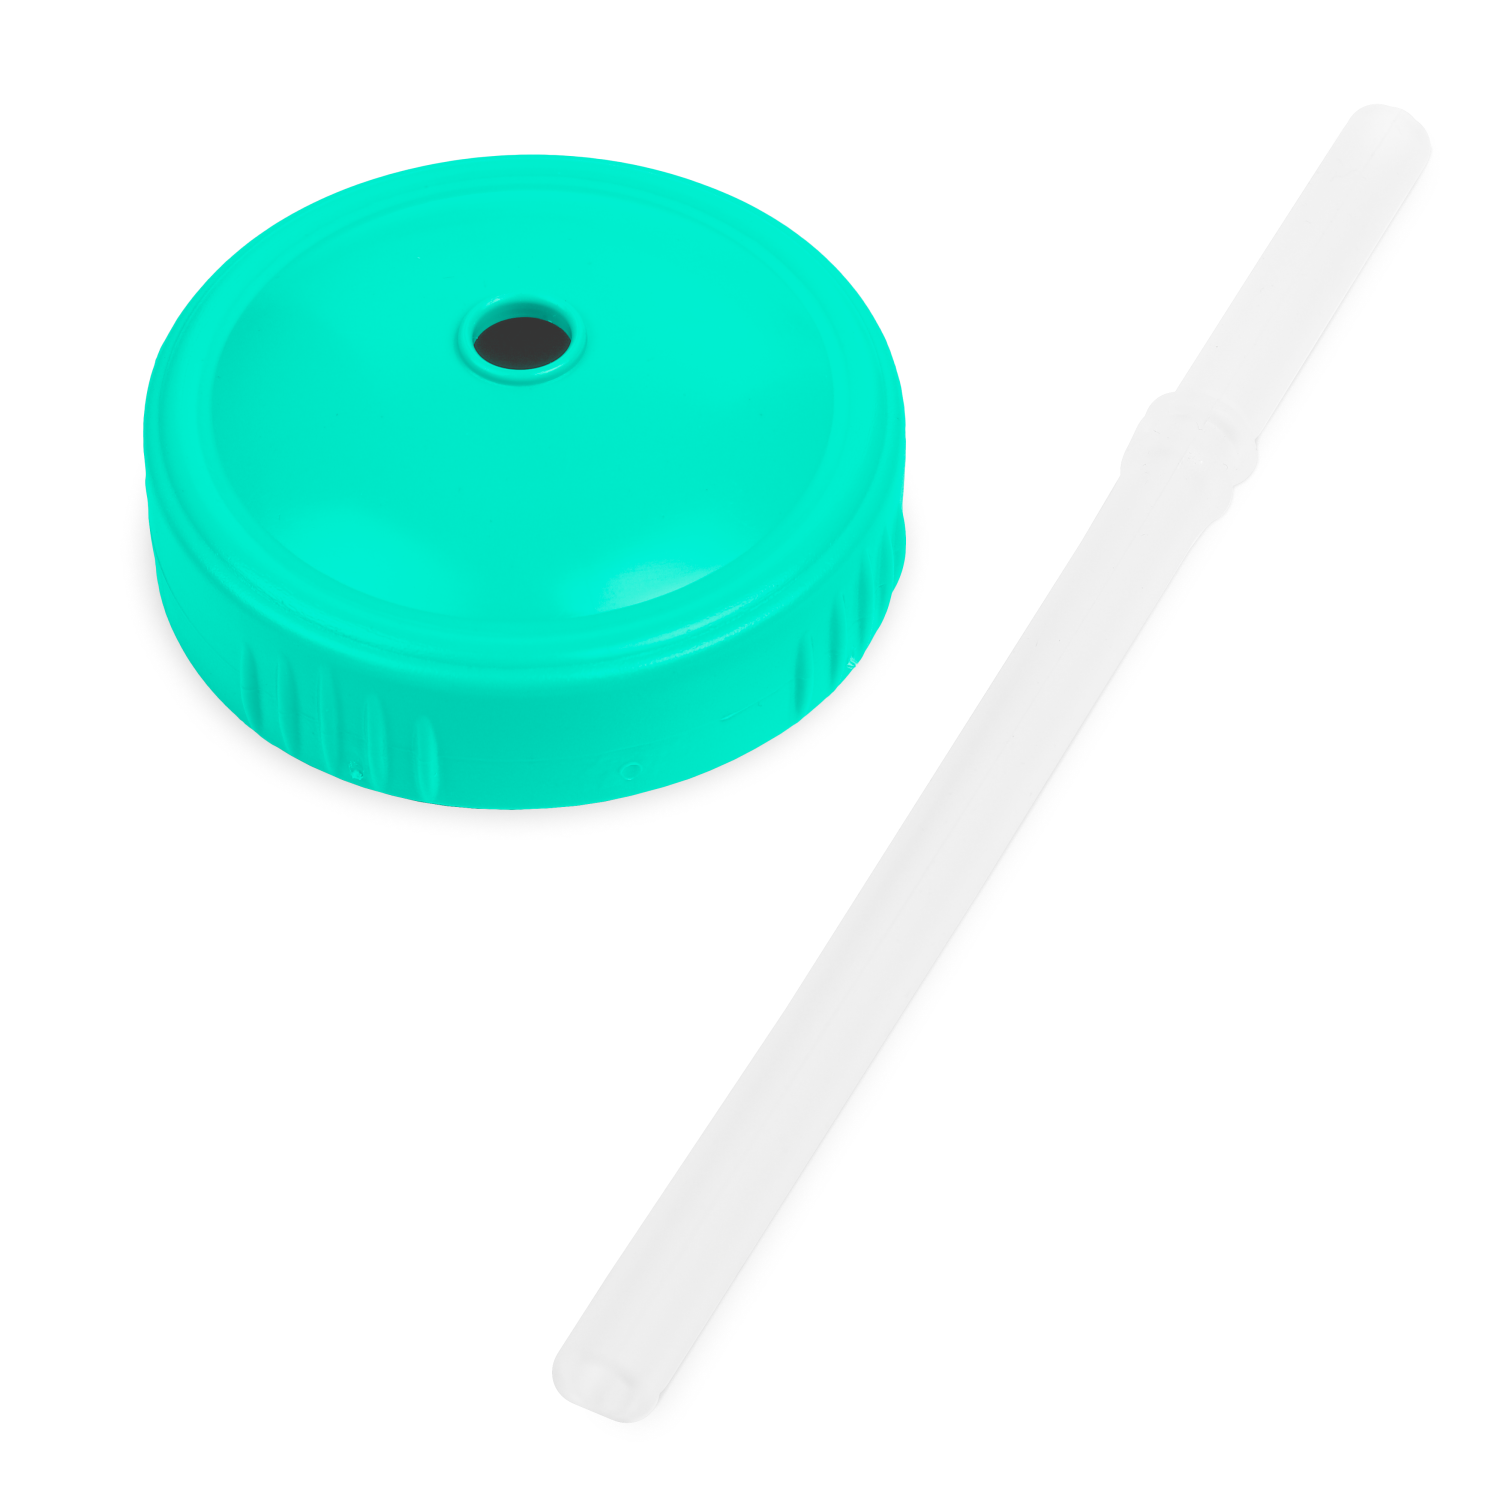 Re-play Straw Cups - Colorwheel - 6pk/10oz : Target